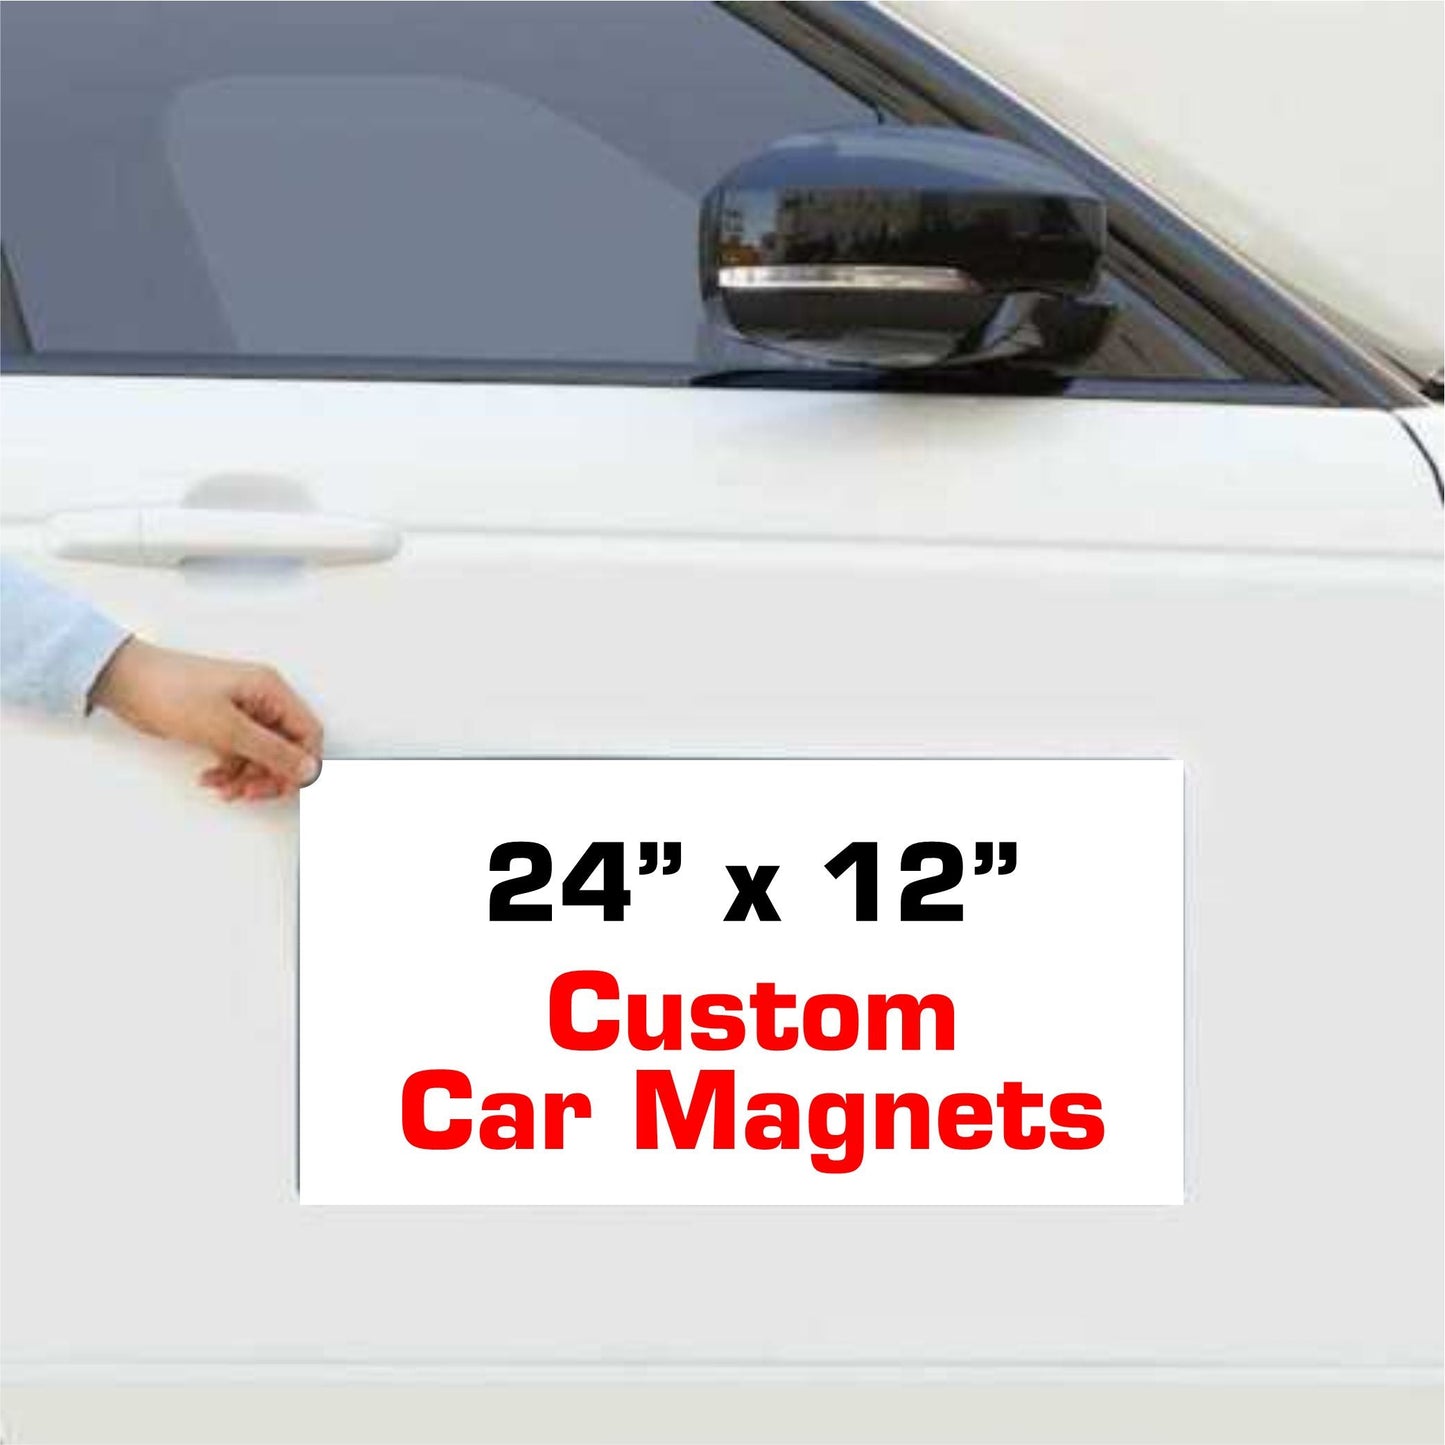 Full Color 24" x 12" Custom Vehicle Magnets Auto Truck Van Car Signs